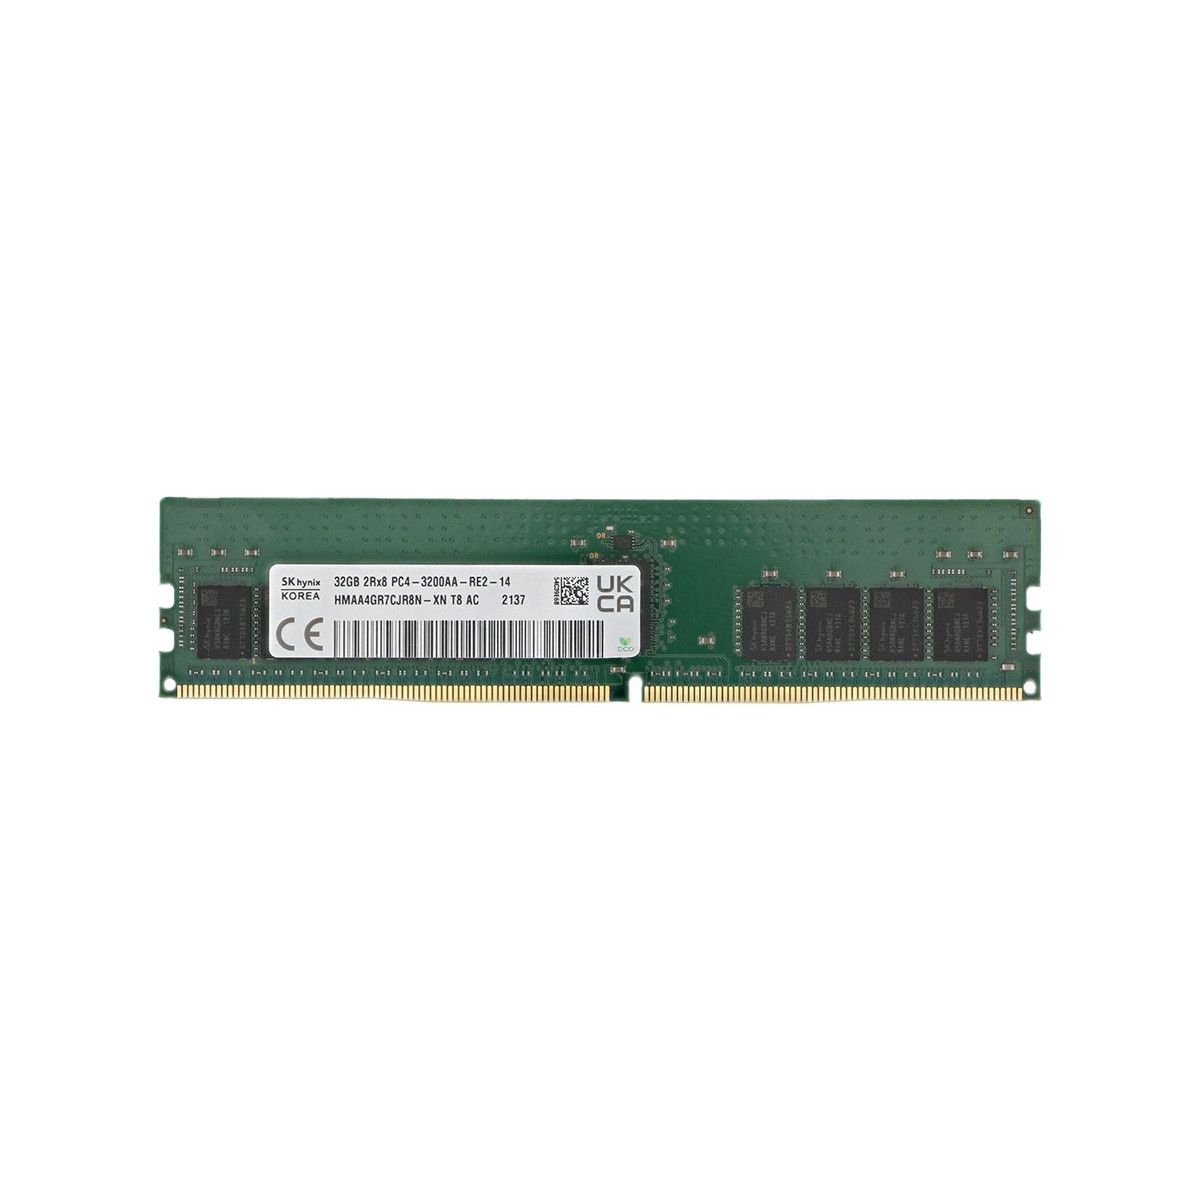 P11445‐1A1-MS - Memstar 1x 32GB DDR4-3200 RDIMM PC4-25600R - Mem-star Compatible OEM Memoria 1 - Memstar 